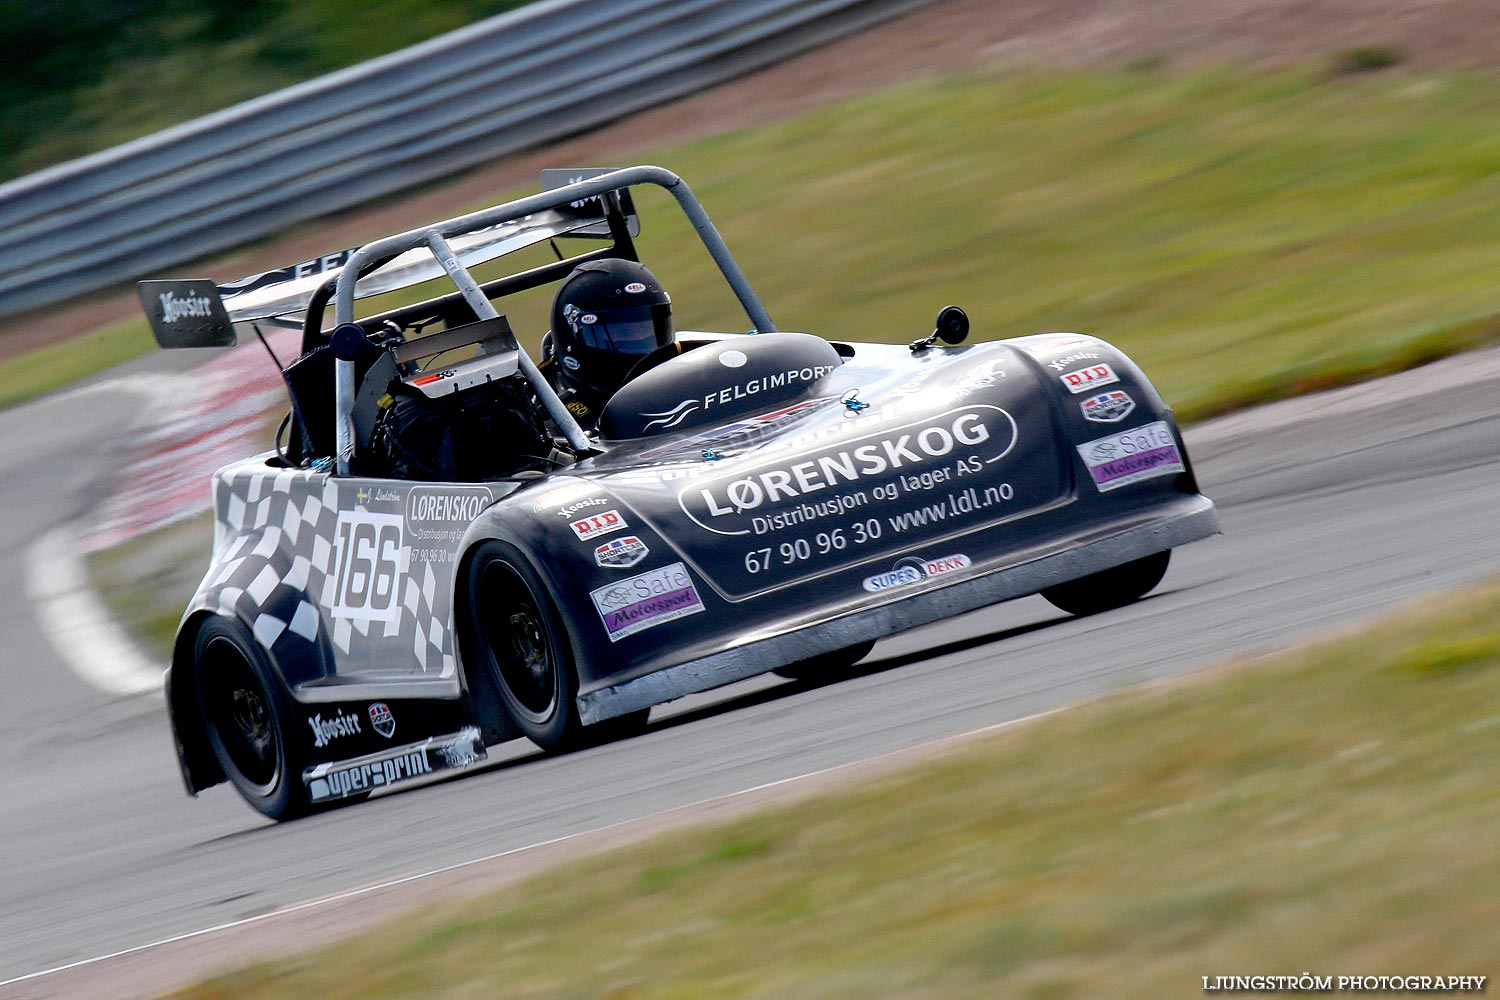 SSK Raceweek,mix,Kinnekulle Ring,Götene,Sverige,Motorsport,,2014,90474